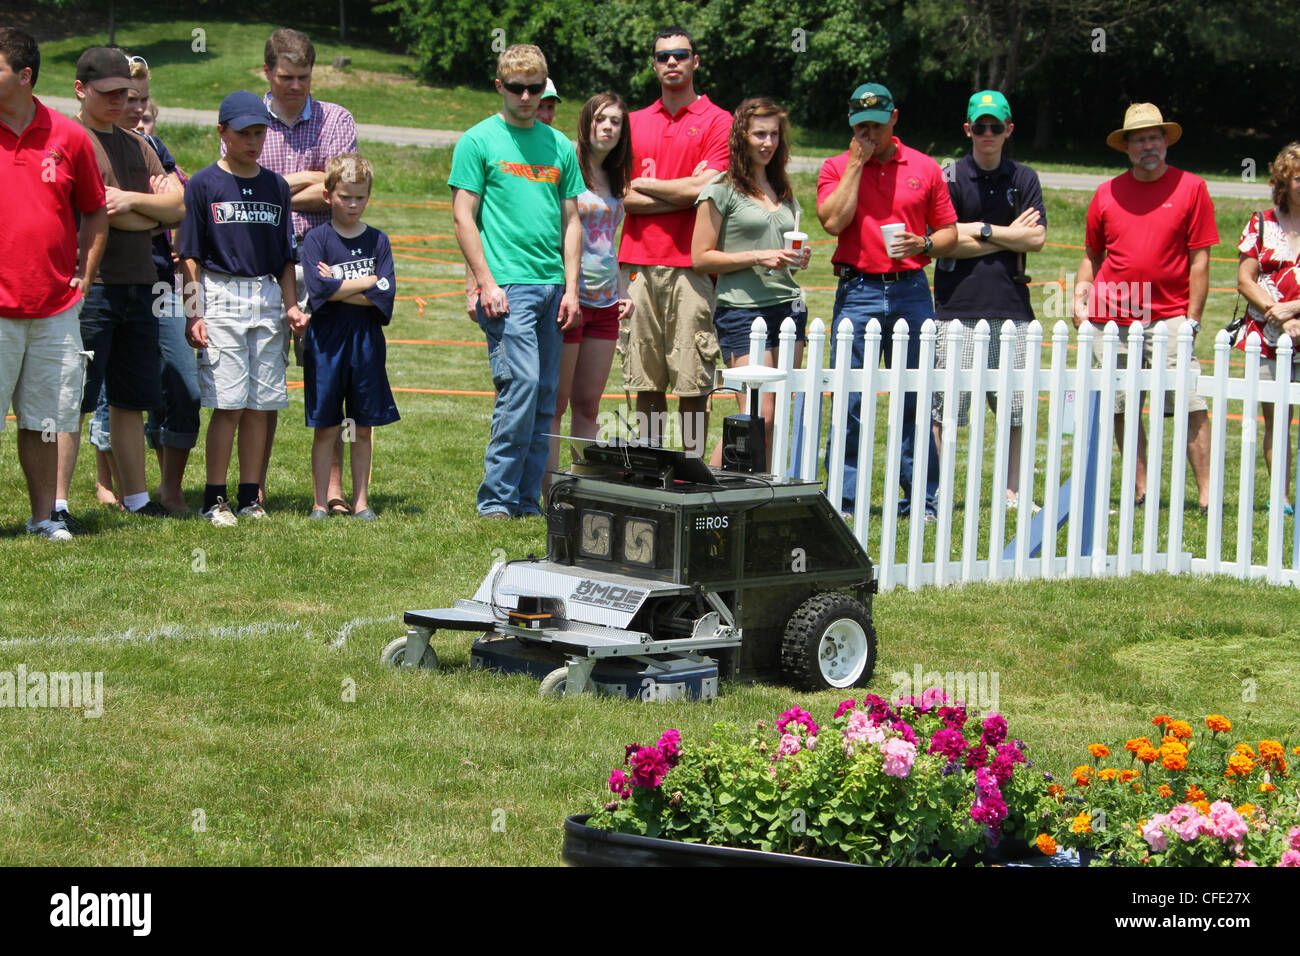 Experimental Robotic Lawn Mower by team Auburn University. Stock Photo